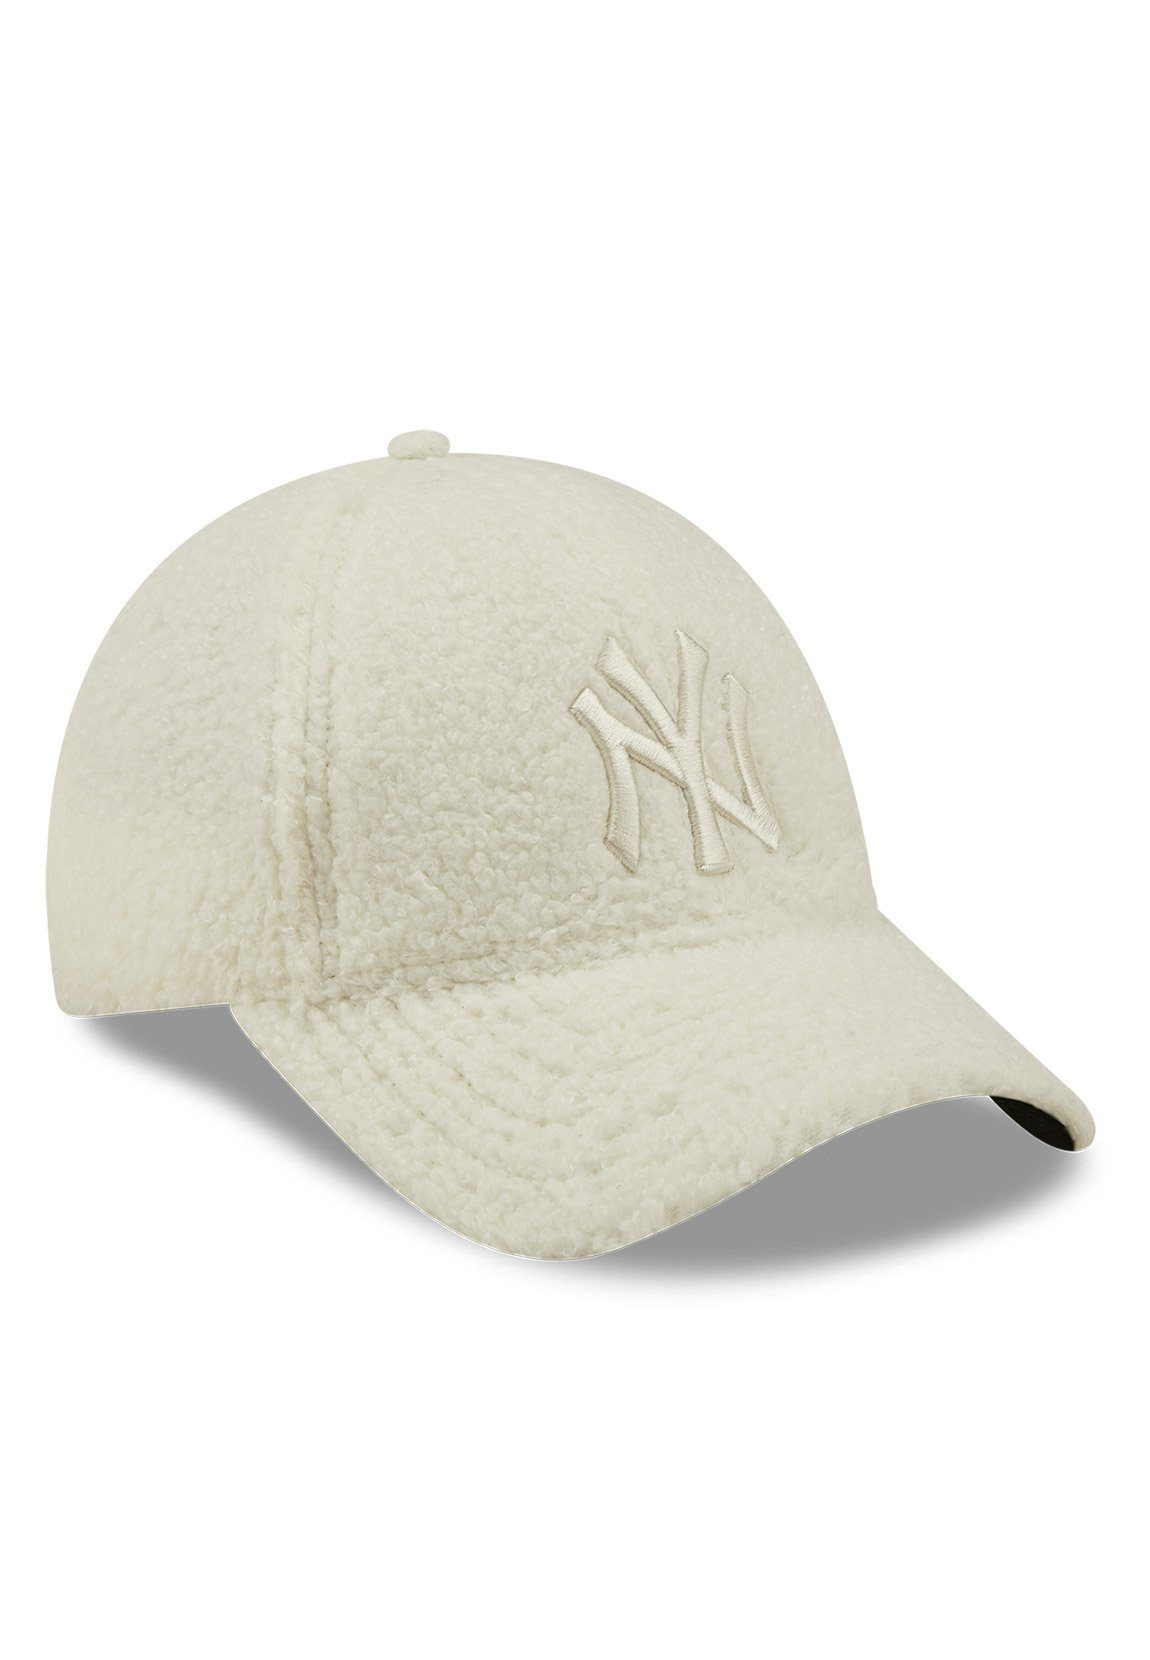 New 9Forty Wmns NY Adjustable Era Beige Baseball YANKEES Cap New Borg Era Cap